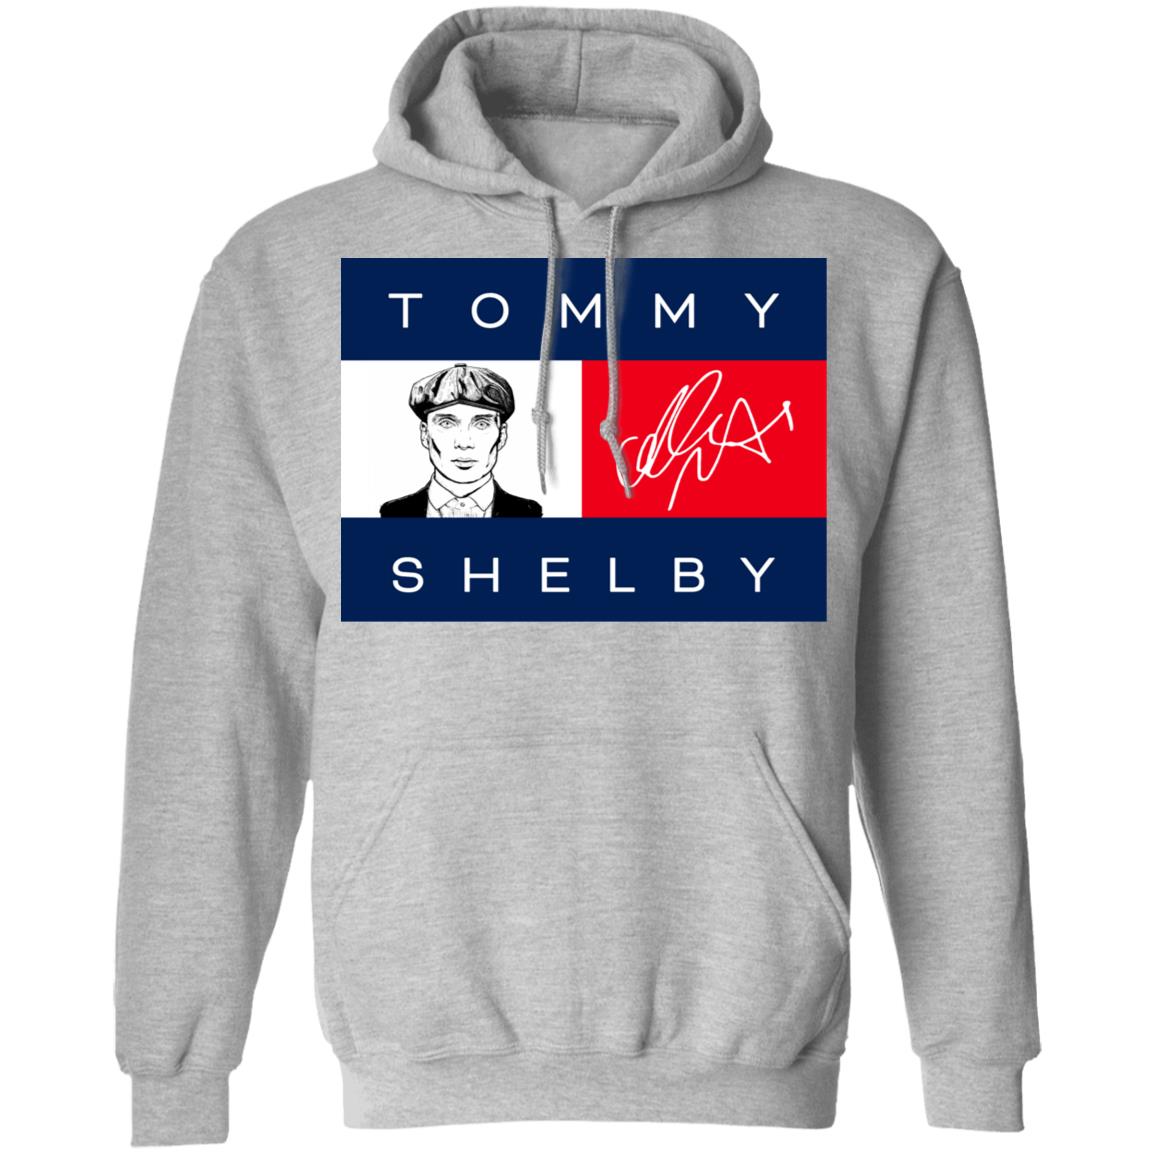 tommy shelby sweatshirt